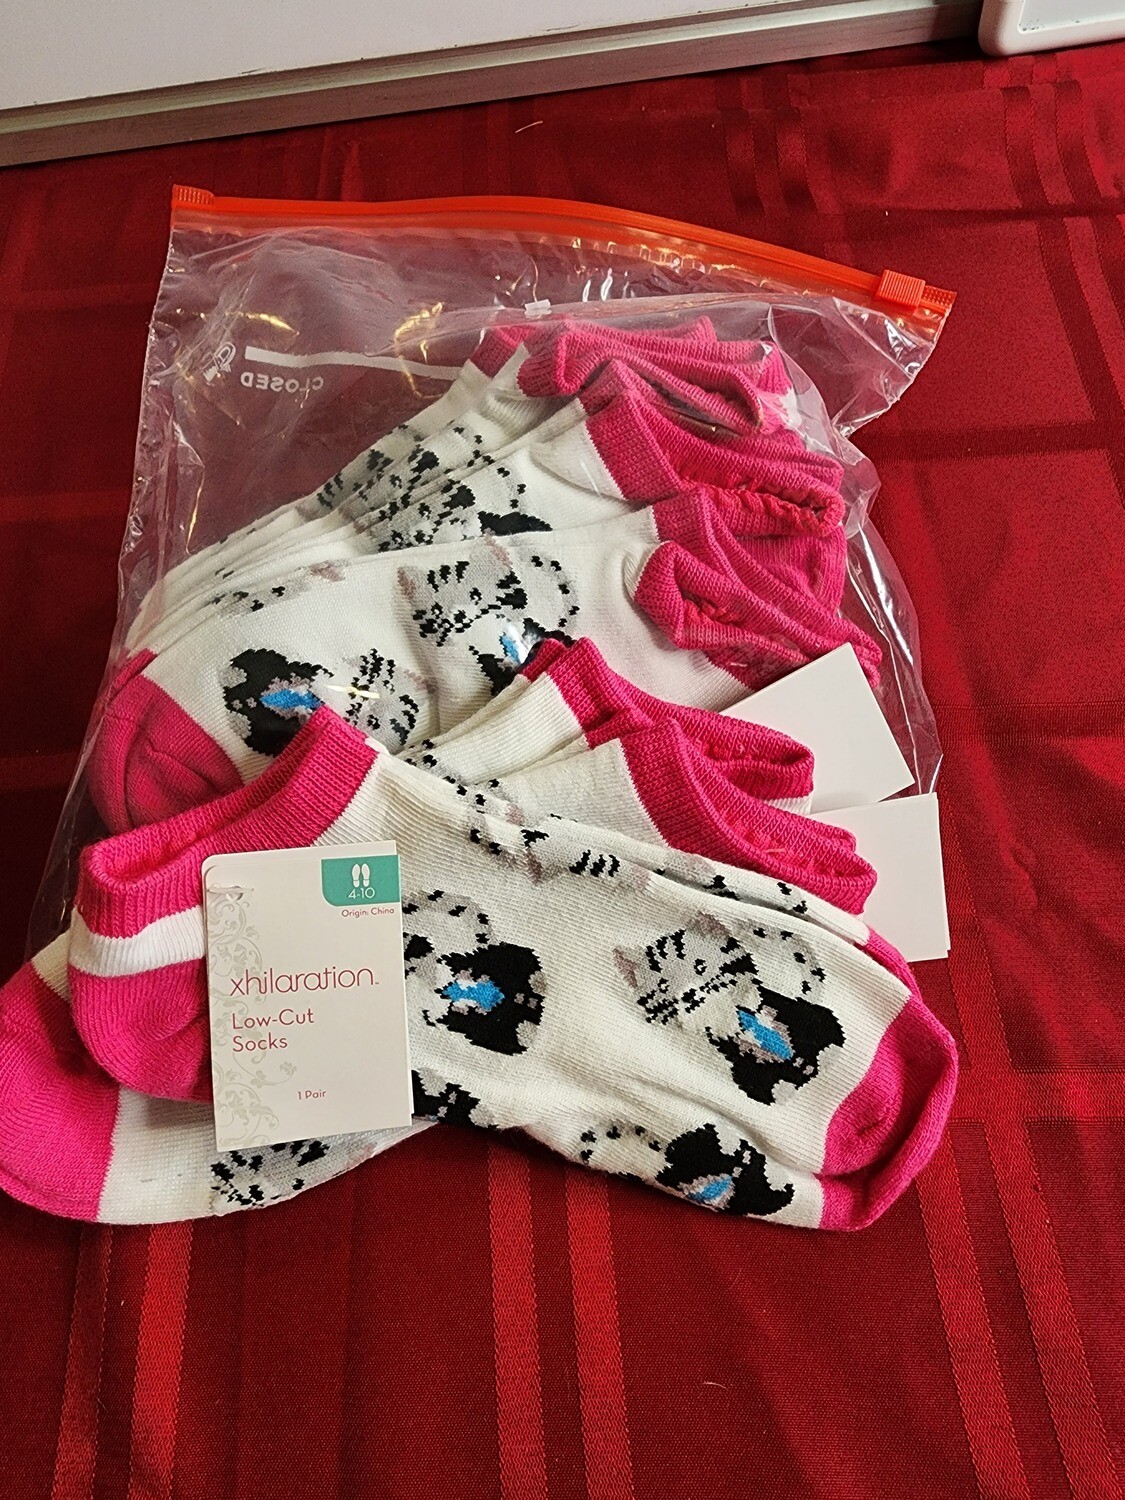 New sock bundles